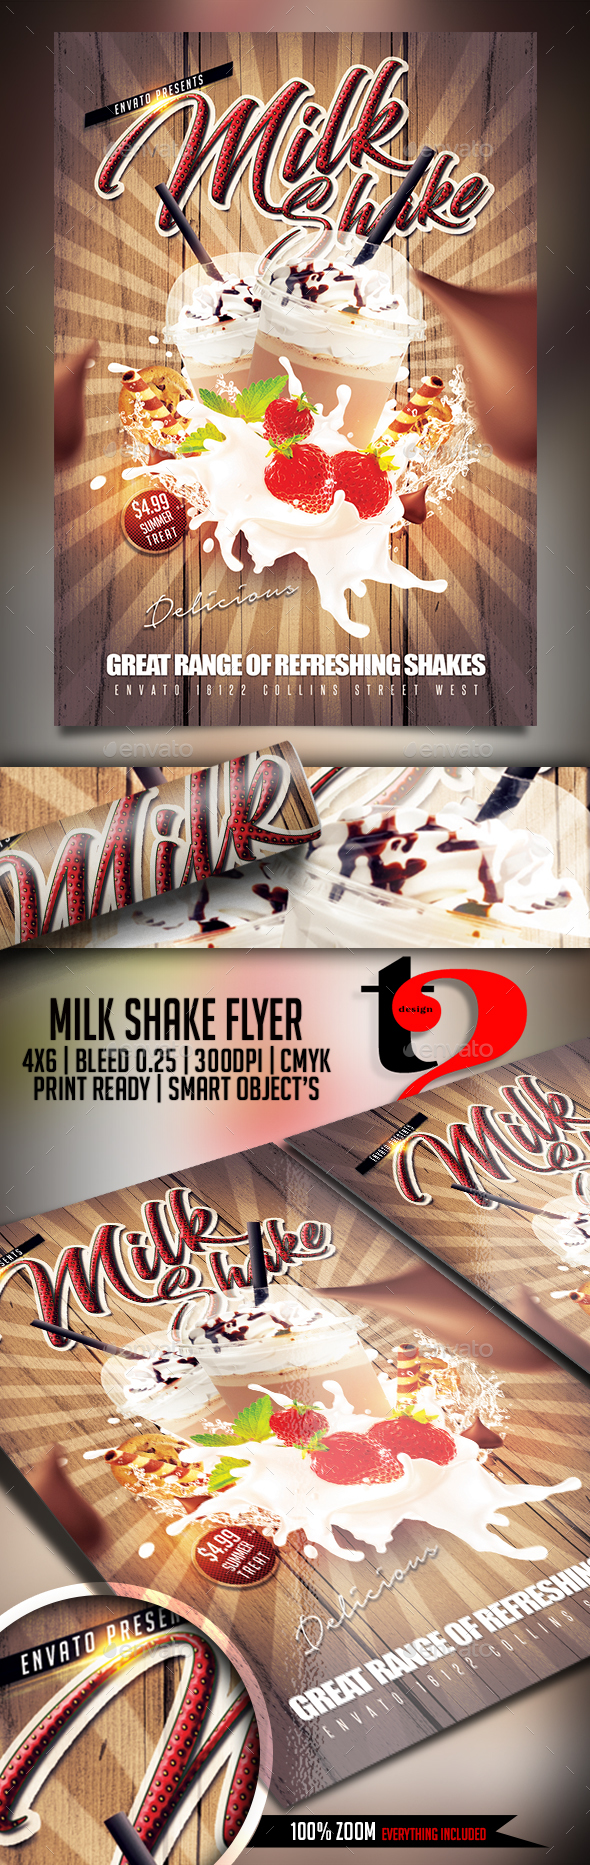 Milk Shake Flyer Template